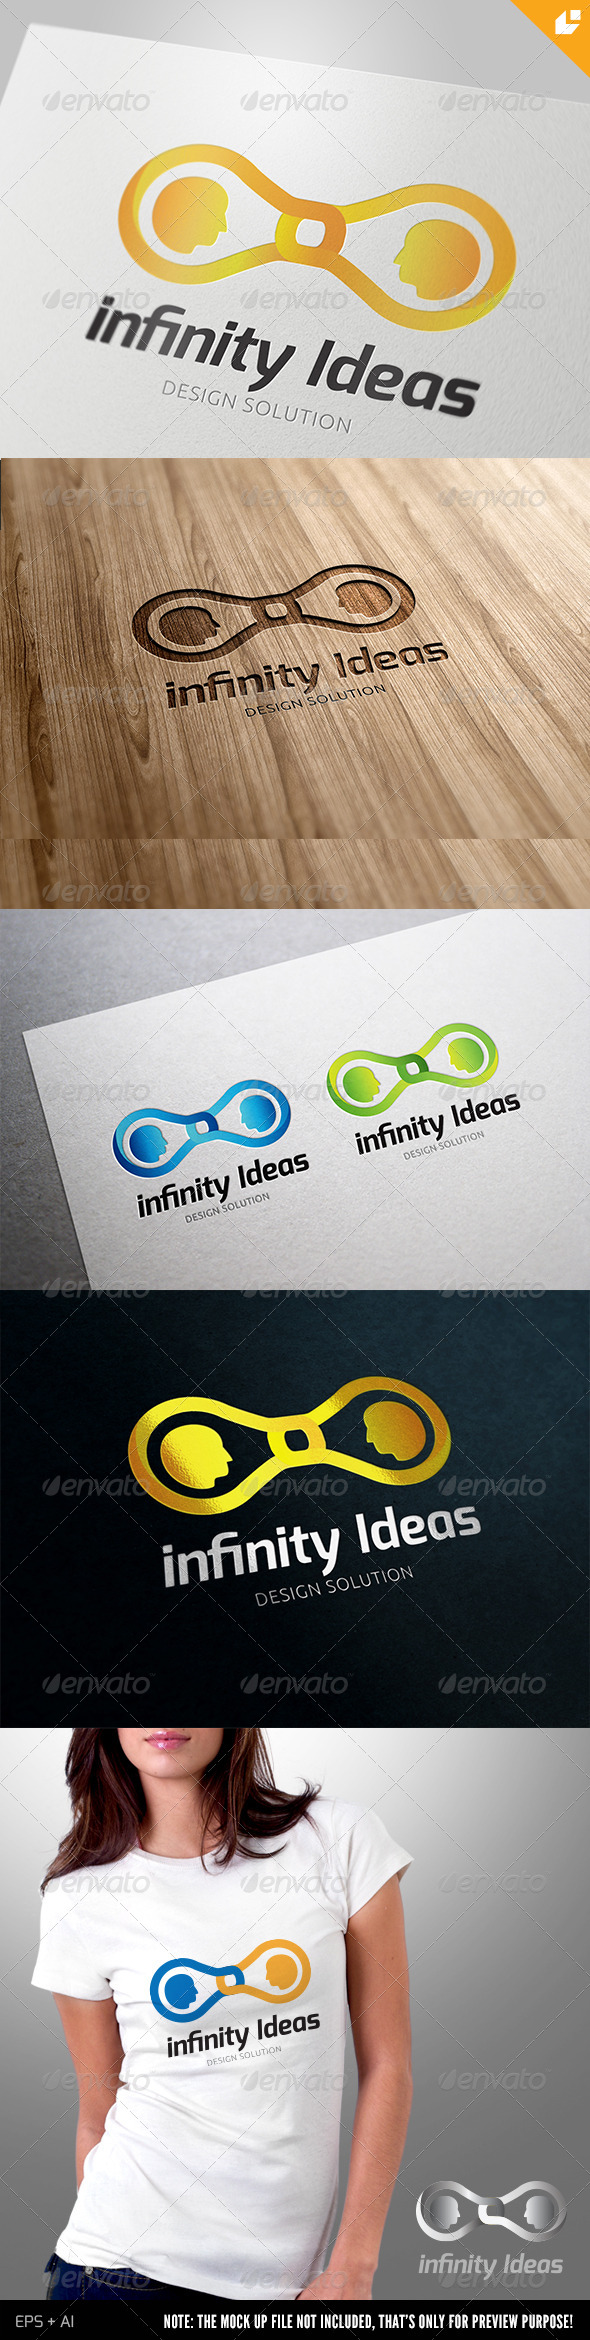 Infinity ideas Logo